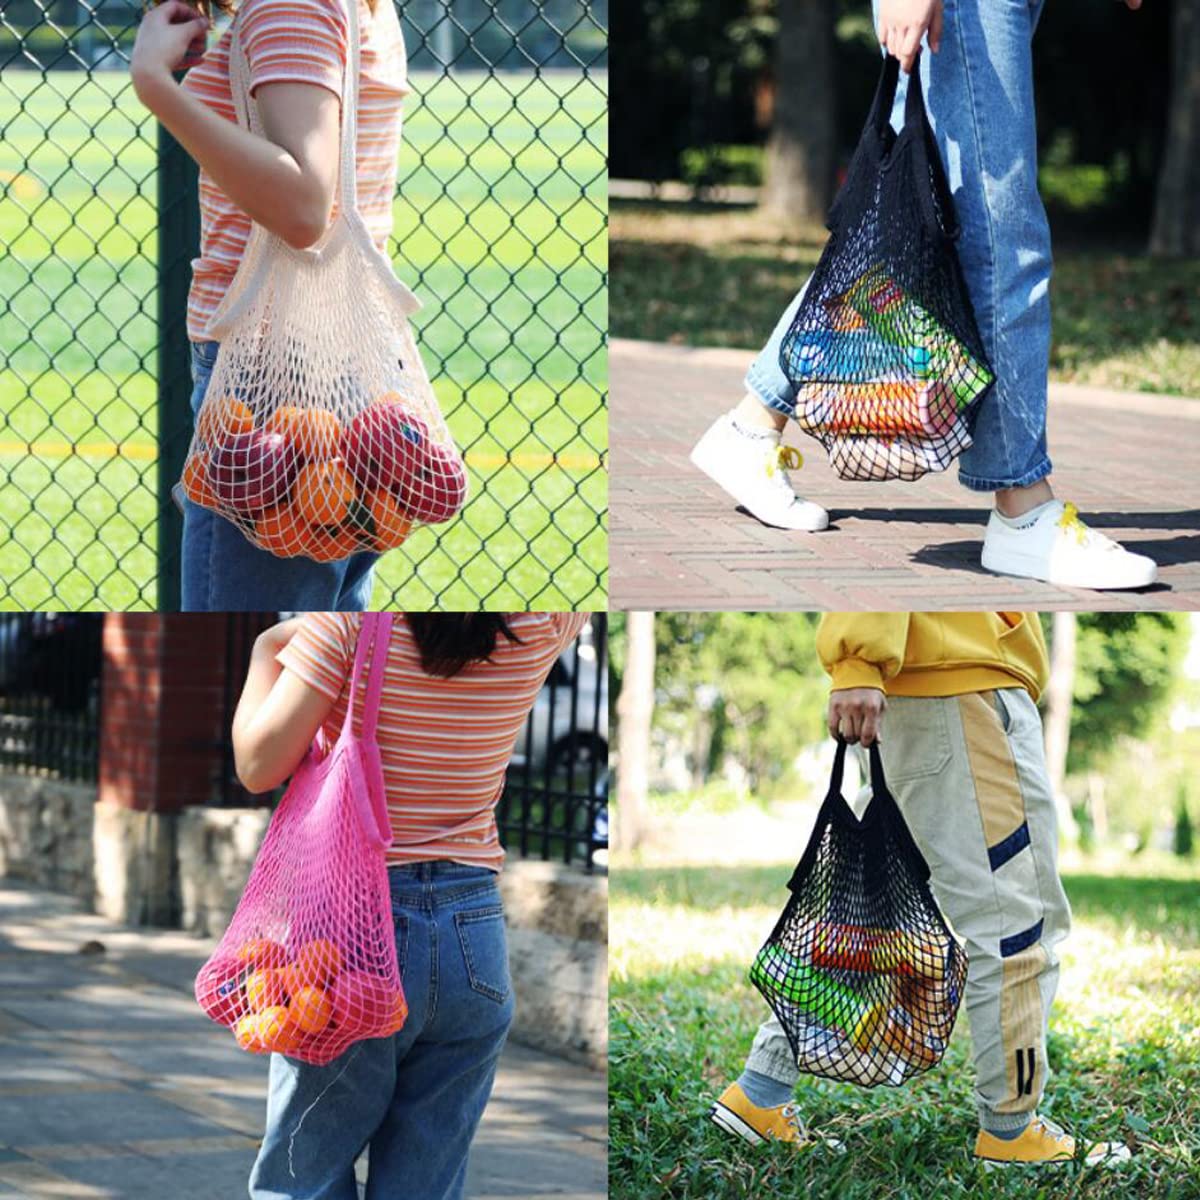 FZBNSRKO Cotton String Shopping Bags,2 Pack Cotton Mesh Bags Random Style Reusable Cotton Mesh Grocery Bags for Fruit&Vegetable Market Bags/Shopping Produce Net Bags,Black